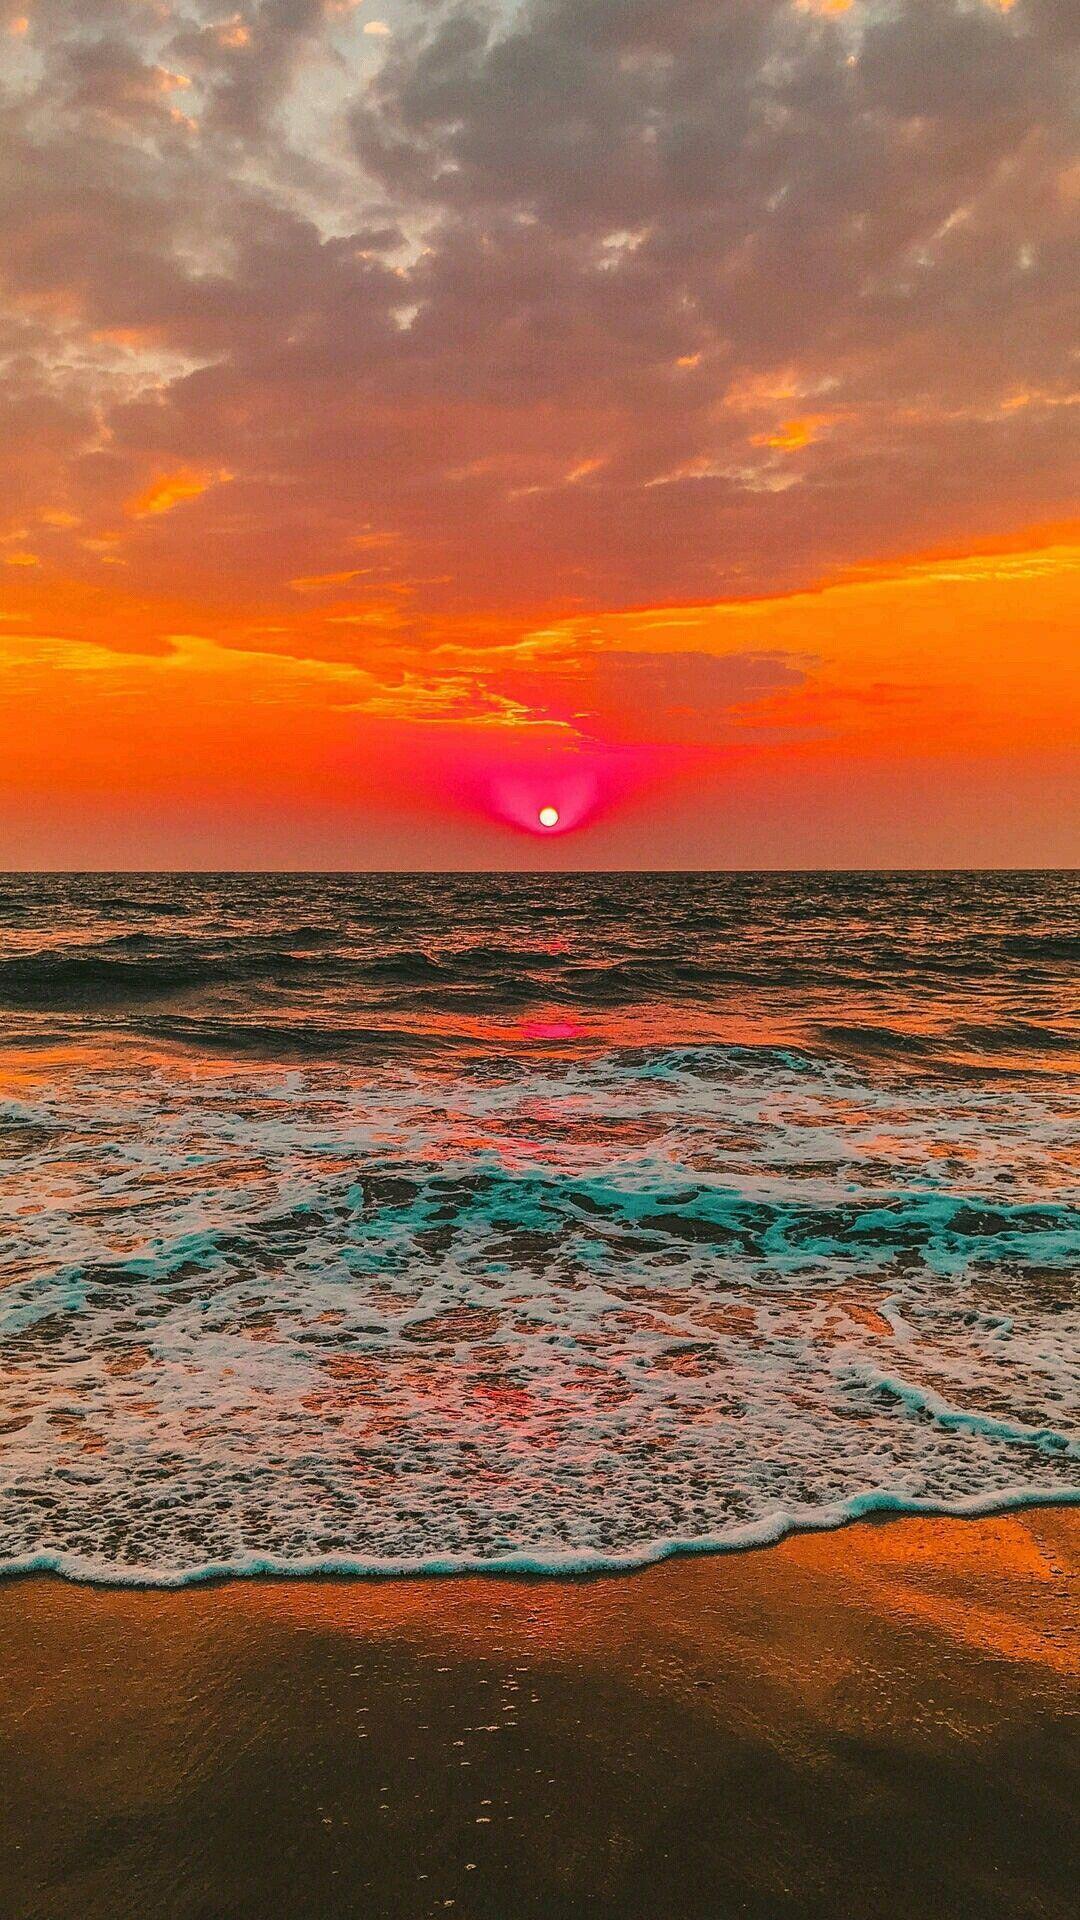 Ocean Sunset Iphone Wallpapers - Top Free Ocean Sunset Iphone